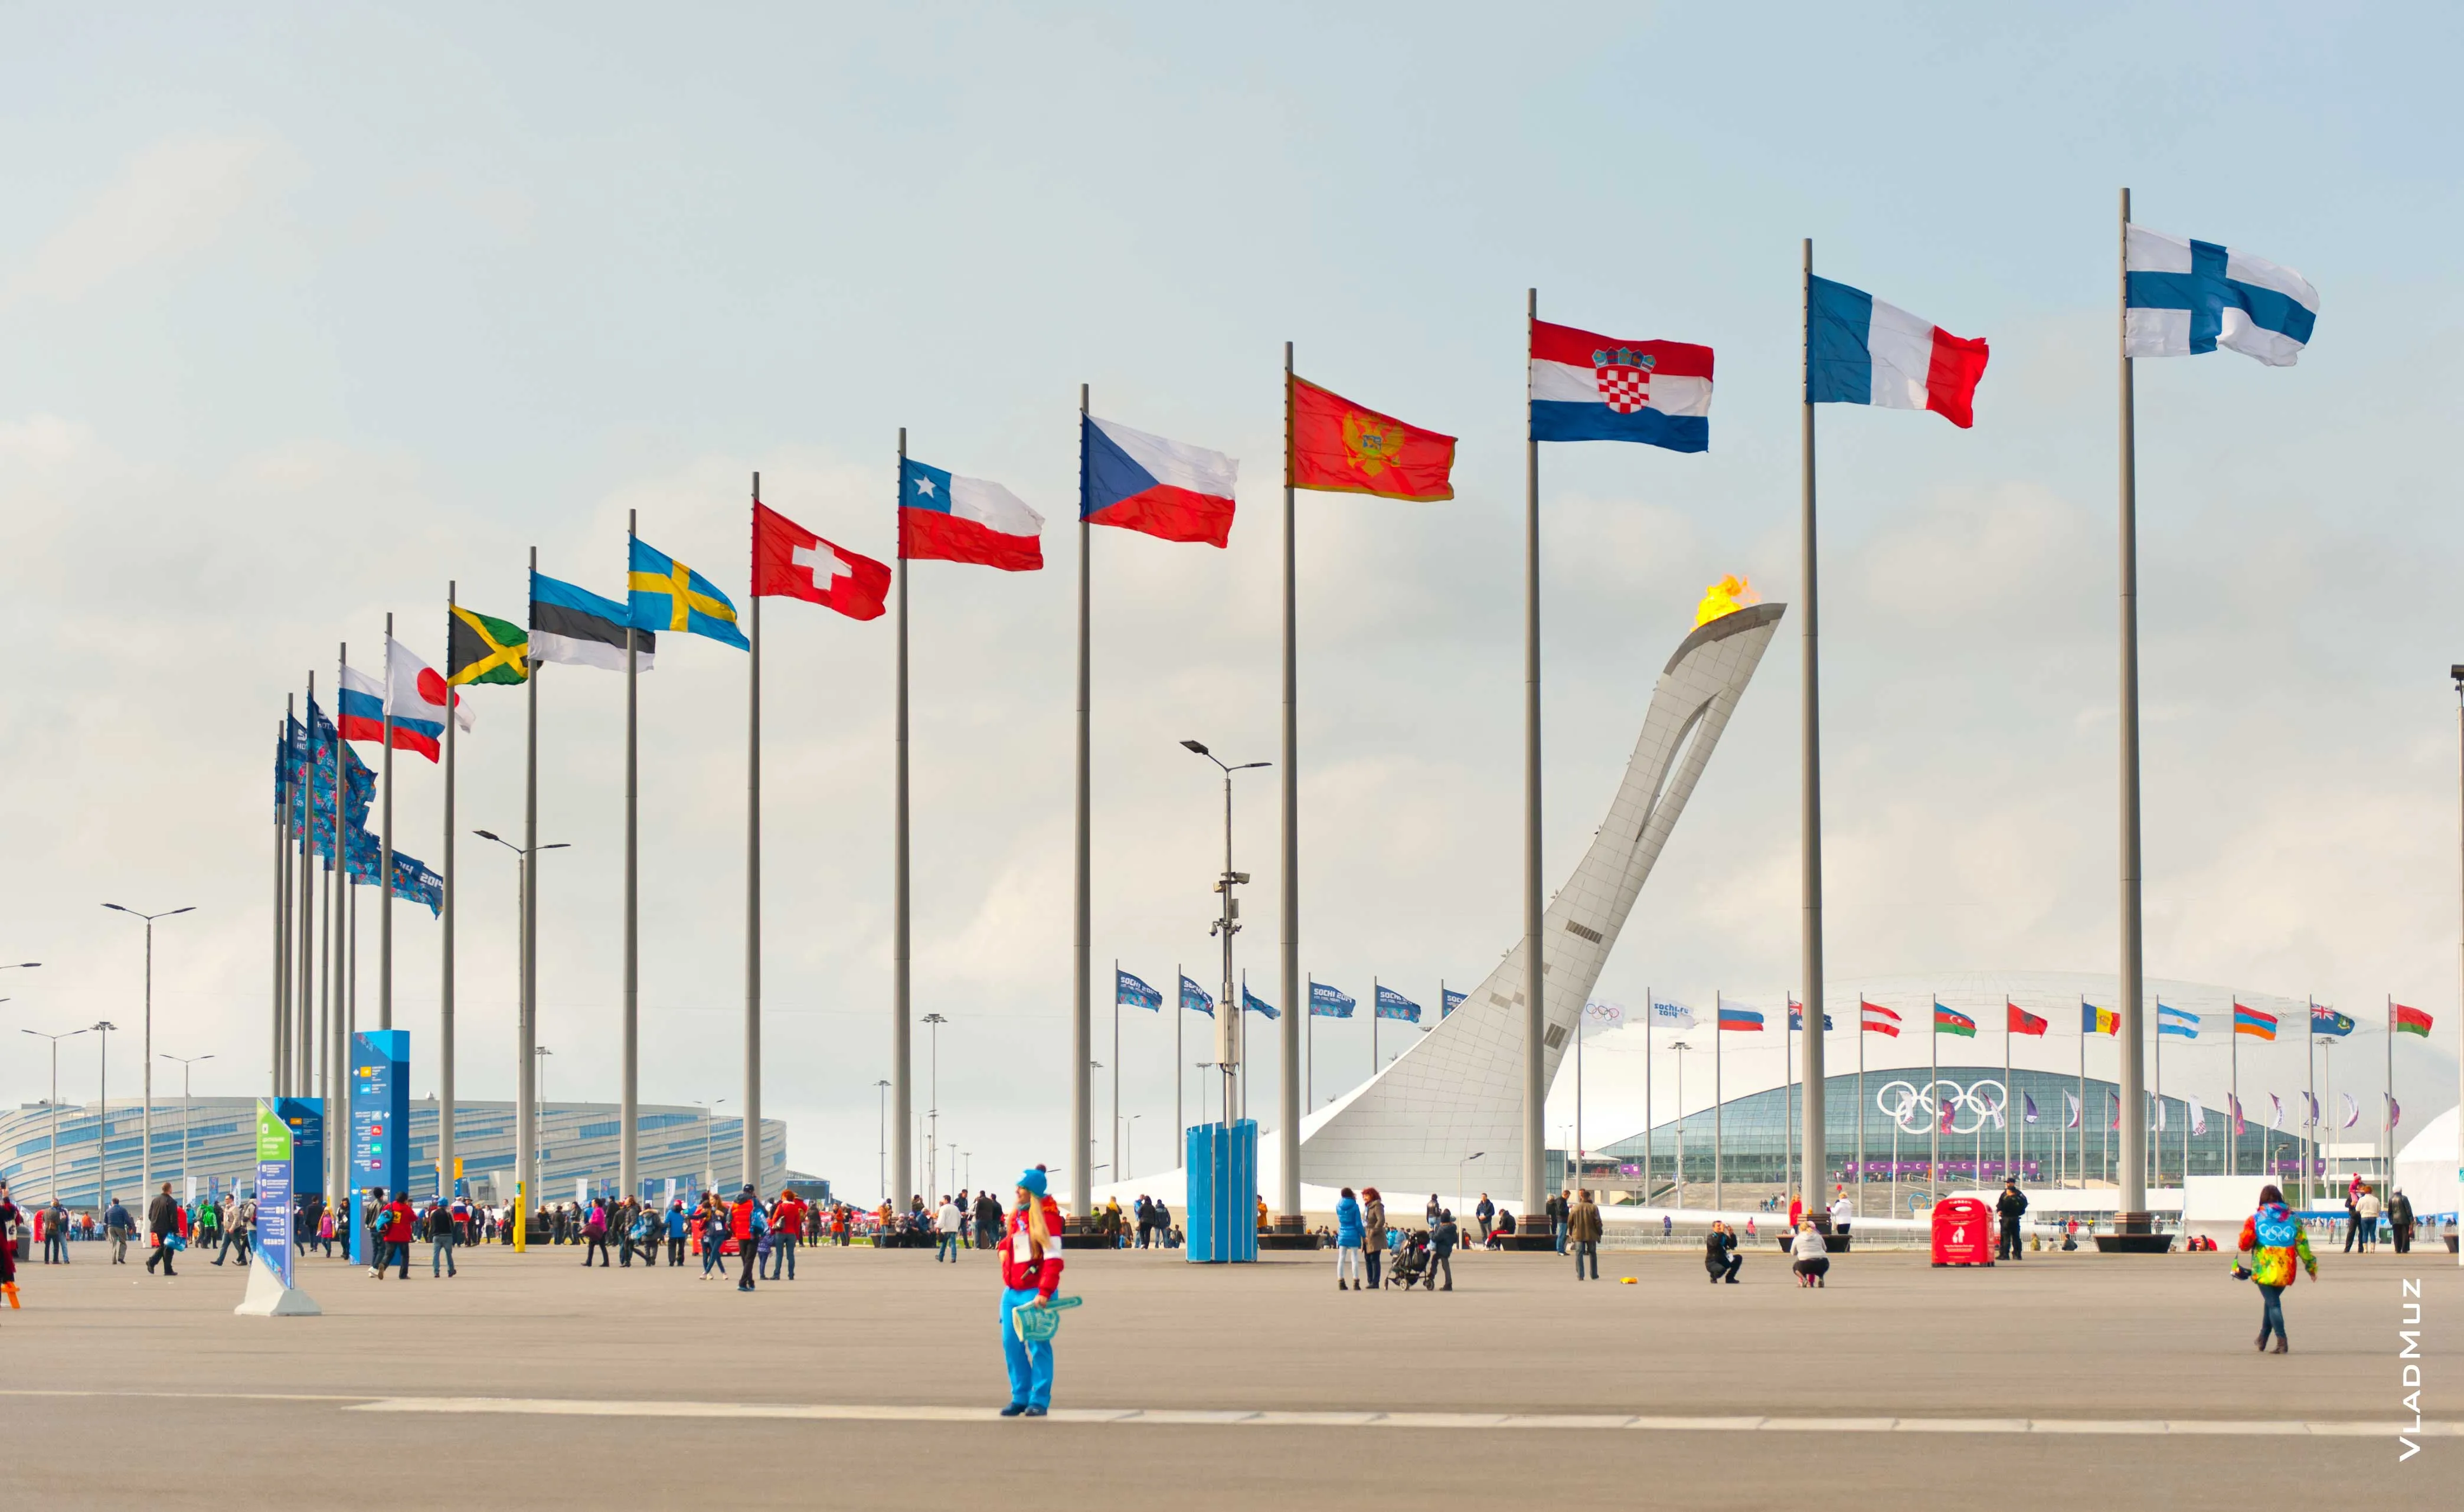 Сочи олимпийская страна. Сочи-Олимпийский парк флагштоки. Олимпийский парк Сочи флаги. Олимпийский парк Сочи 2014. Флаги в Олимпийском парке Сочи.